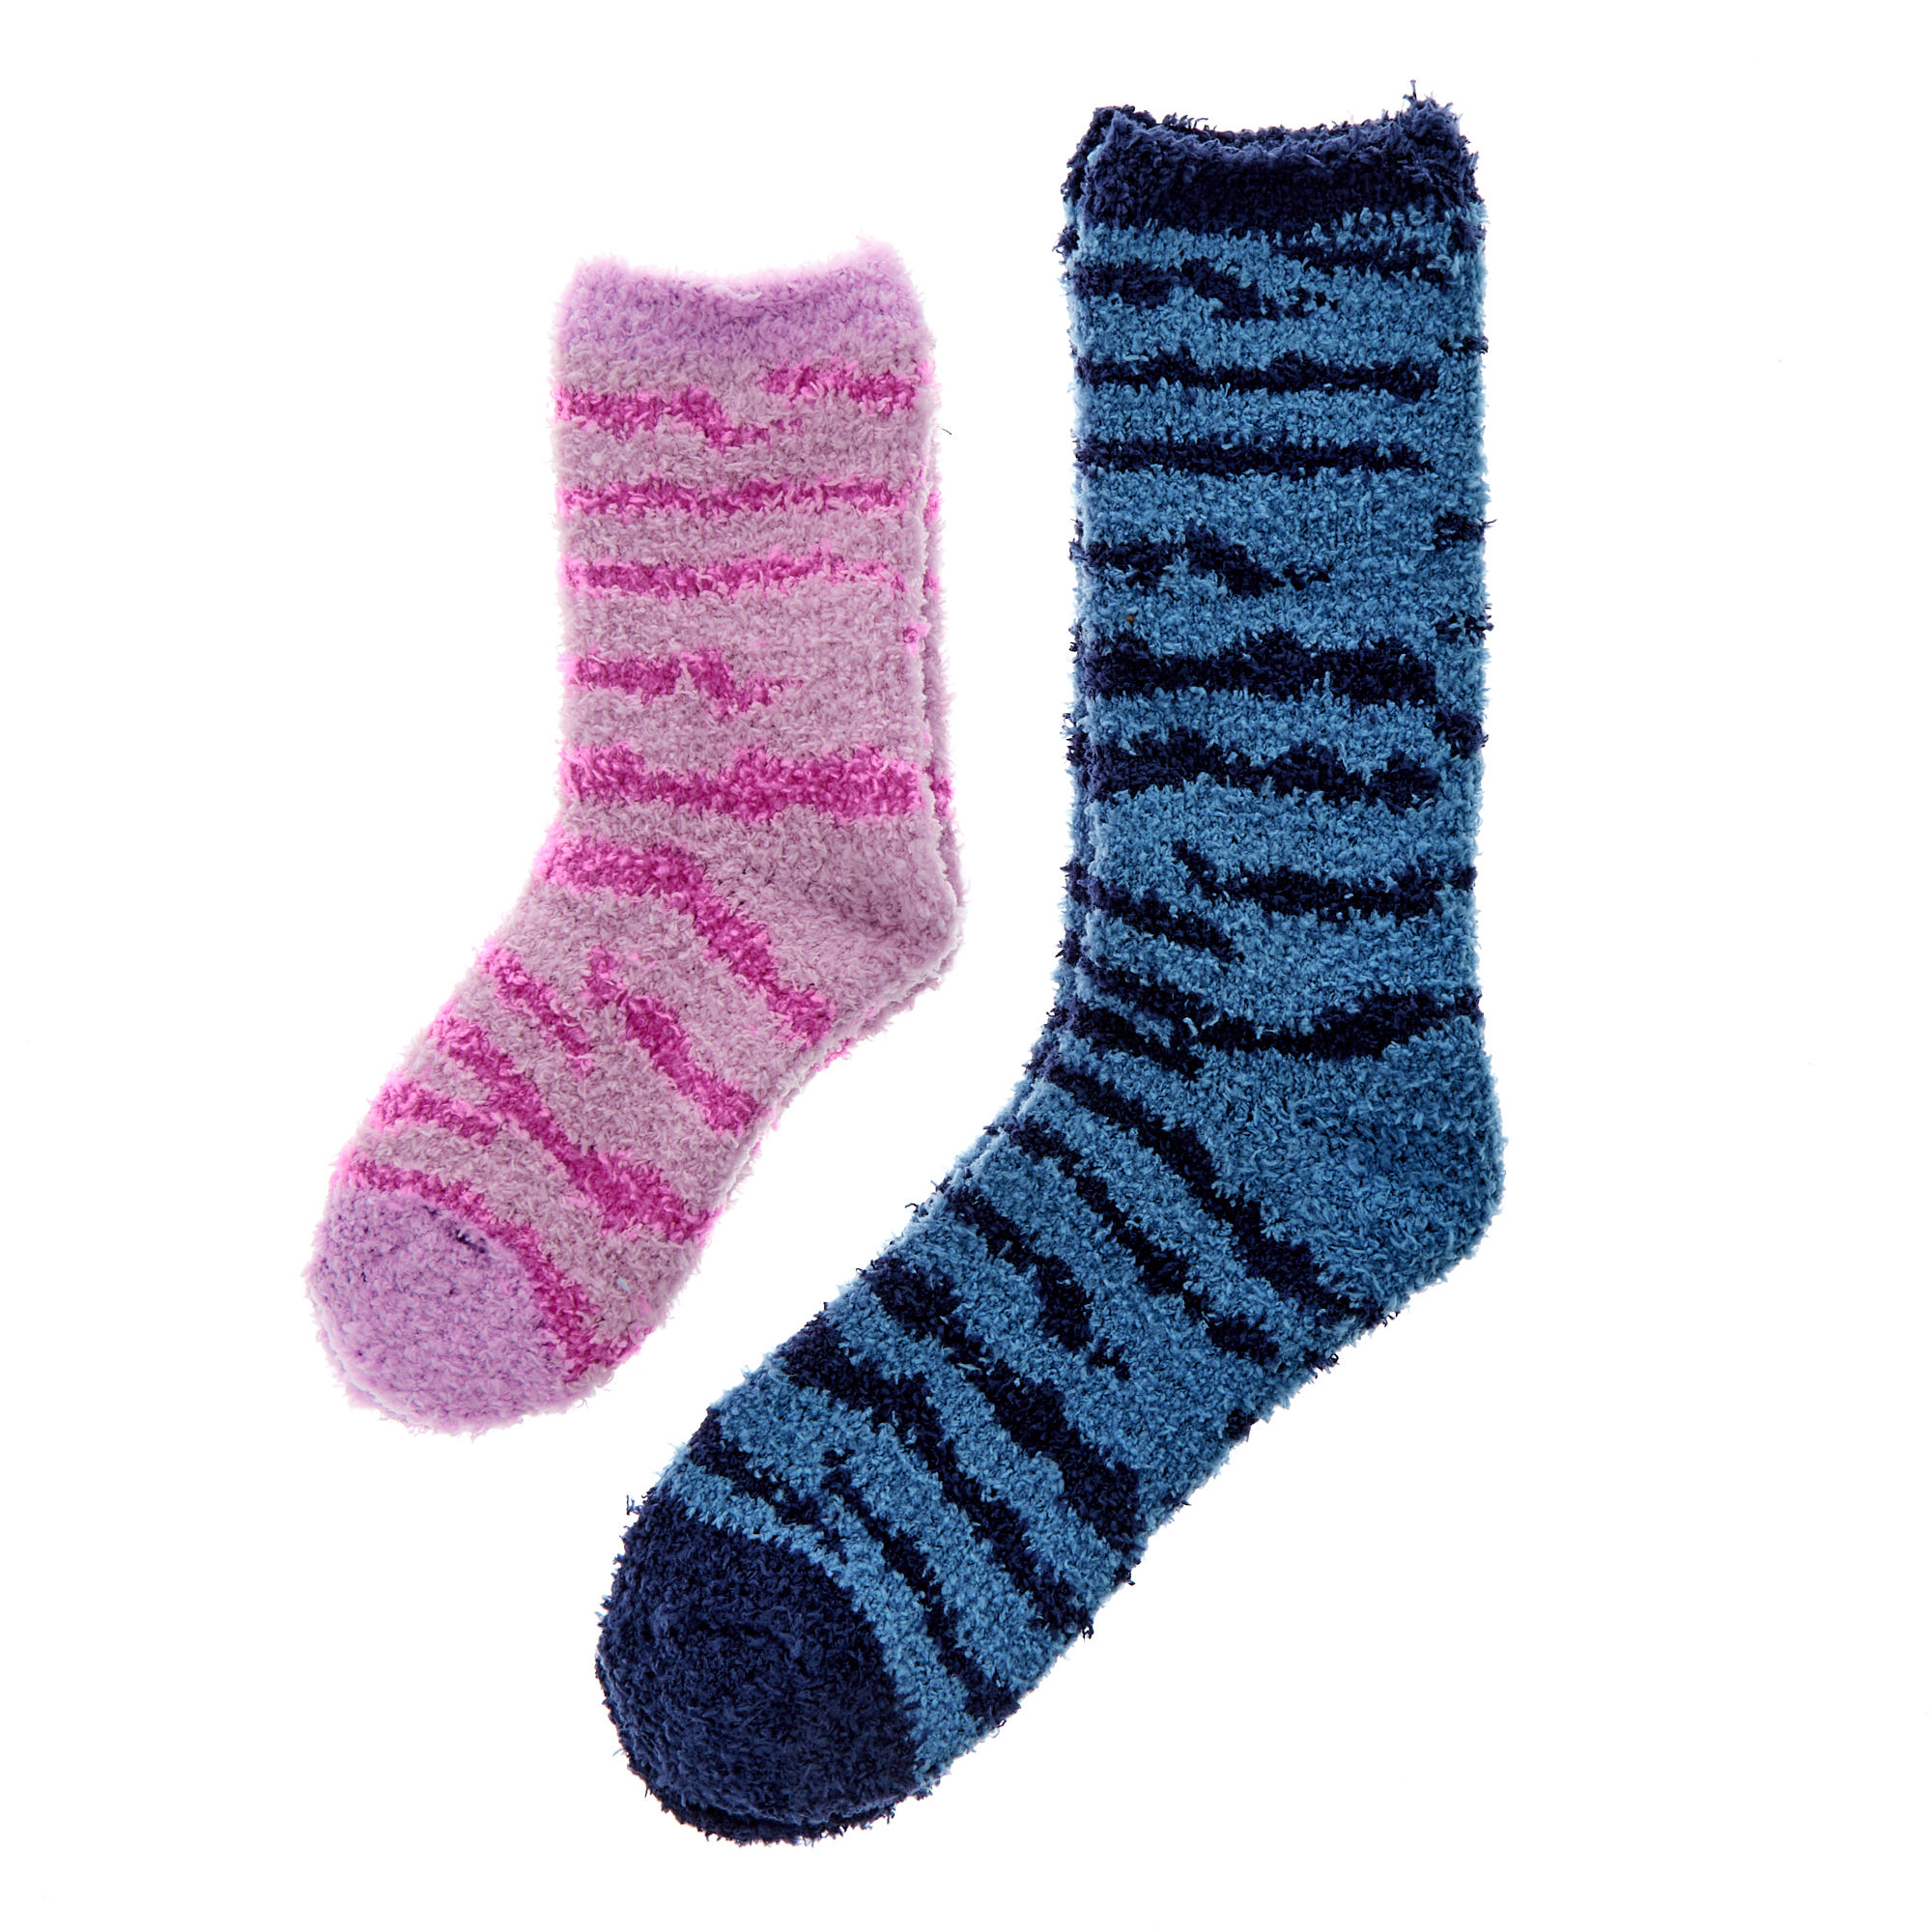 Daddy & Me Snuggle Socks (Blue & Pink)